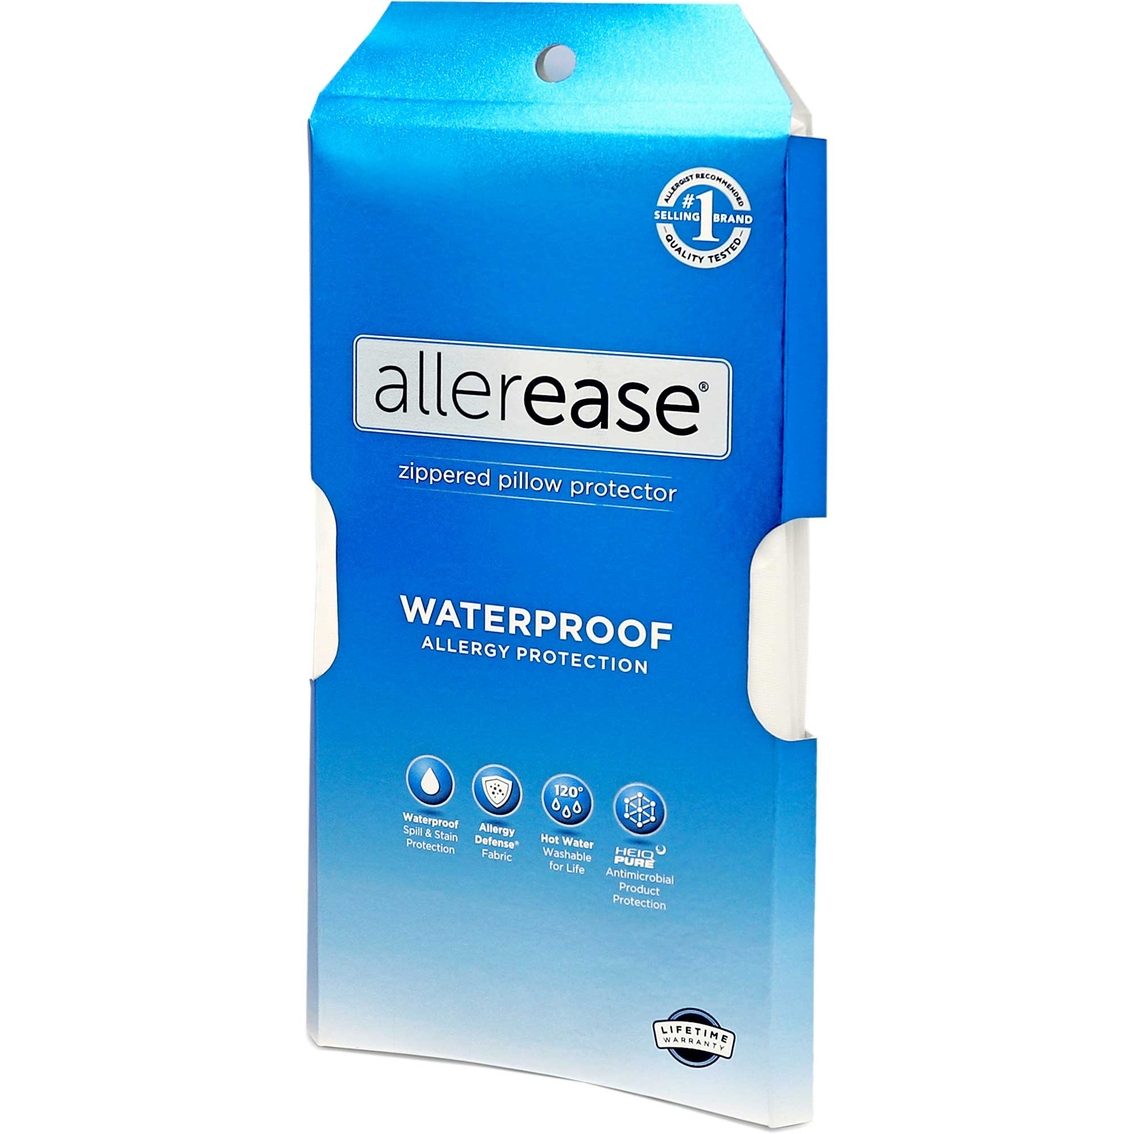 AllerEase Waterproof Pillow Protector - Image 2 of 5